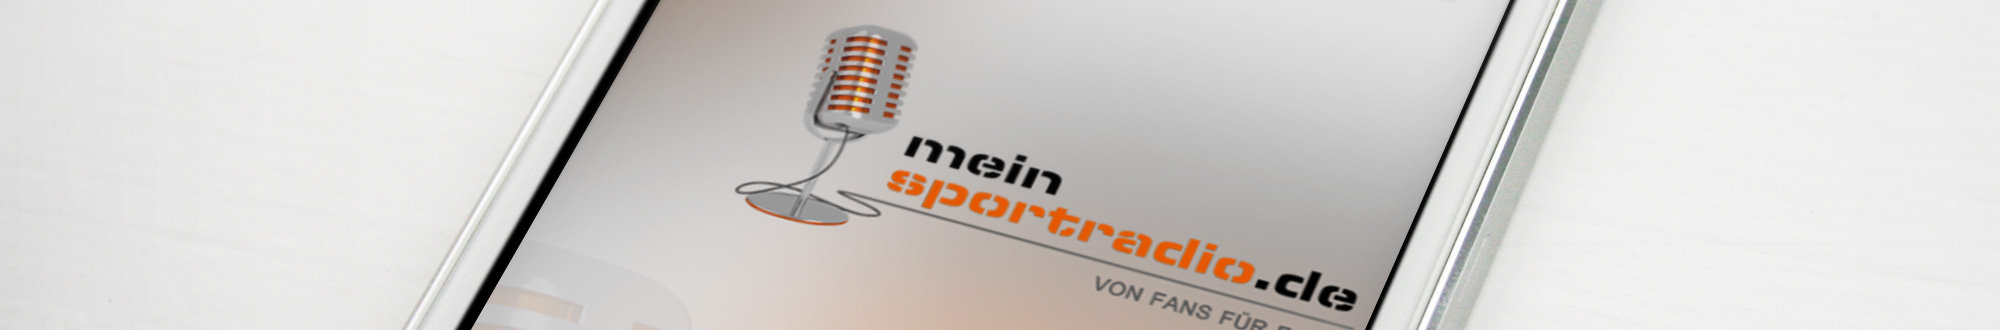 meinsportradio.de